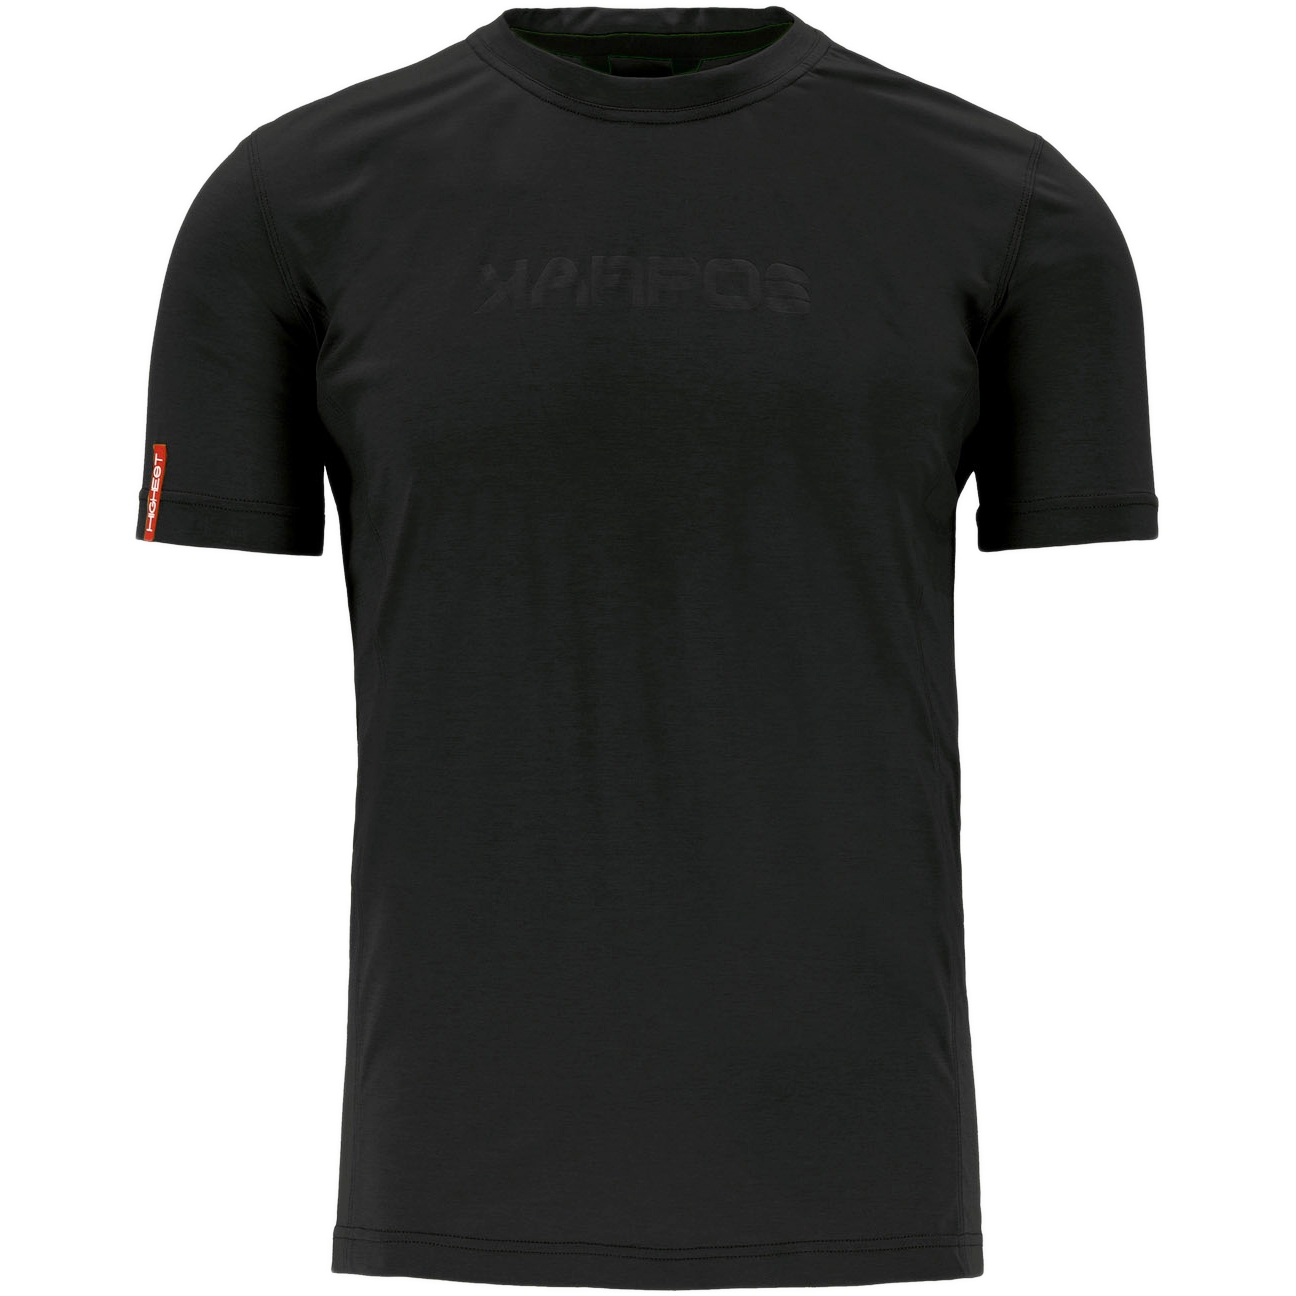 Productfoto van Karpos K-Performance T-Shirt - black